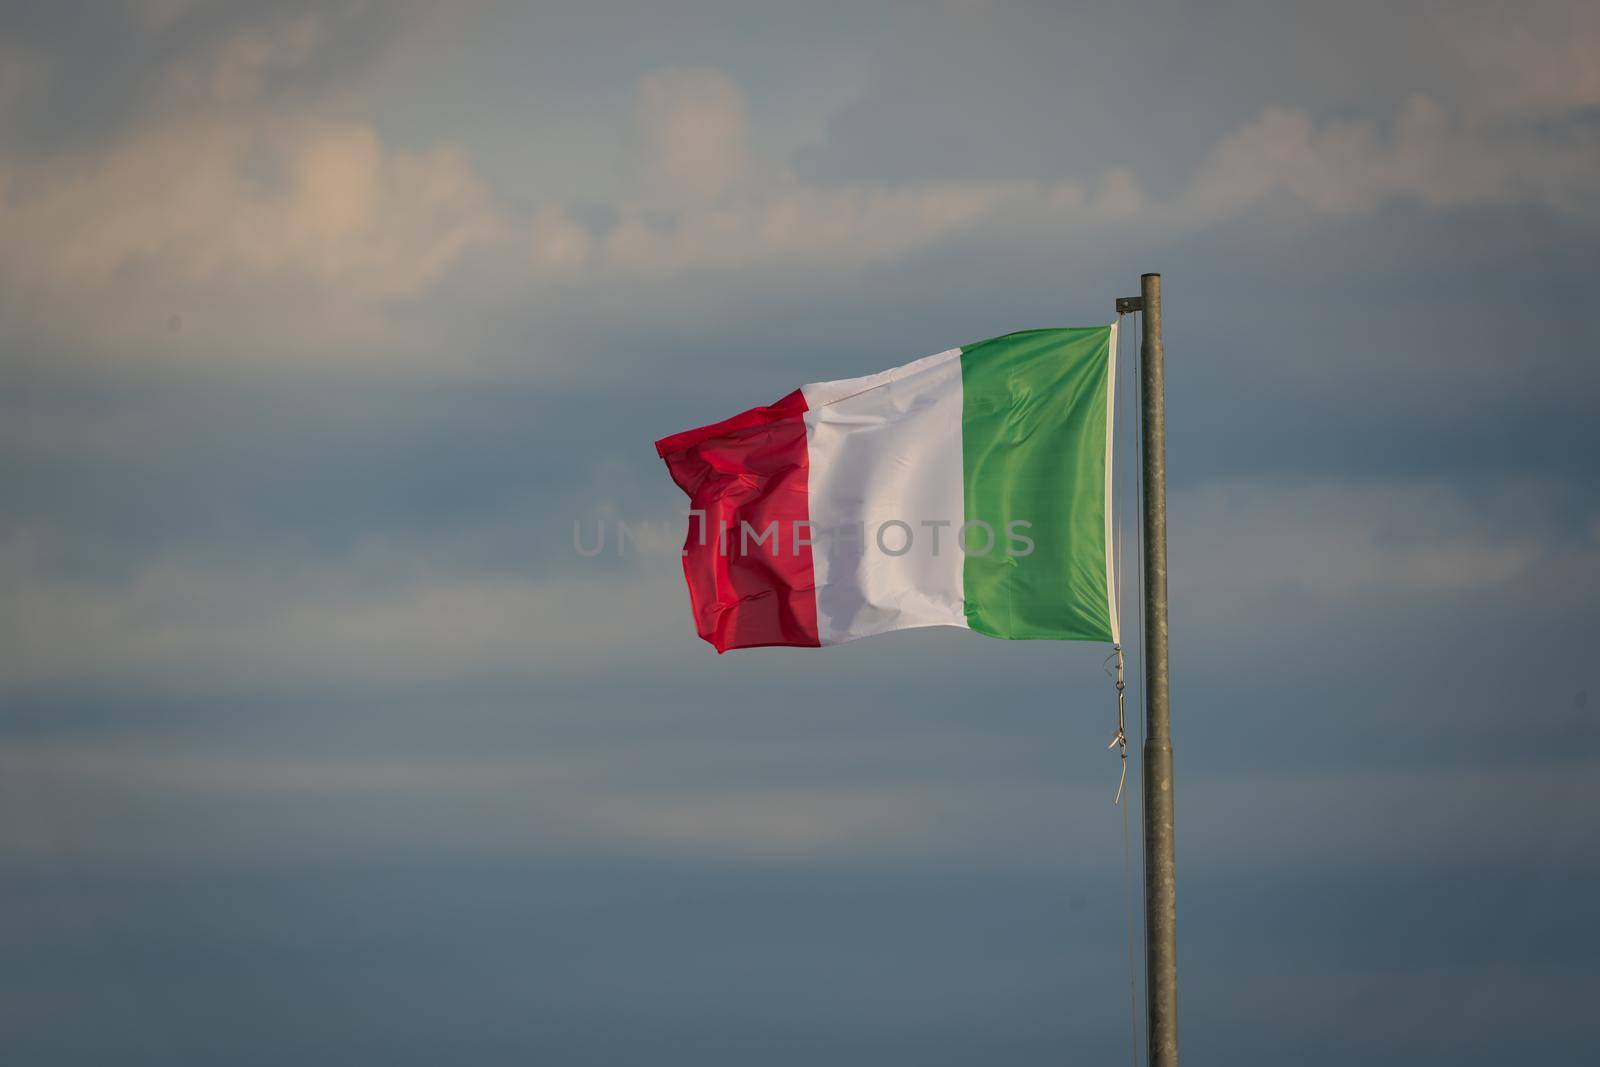 Large Italian flag waving in the wind at sunrise